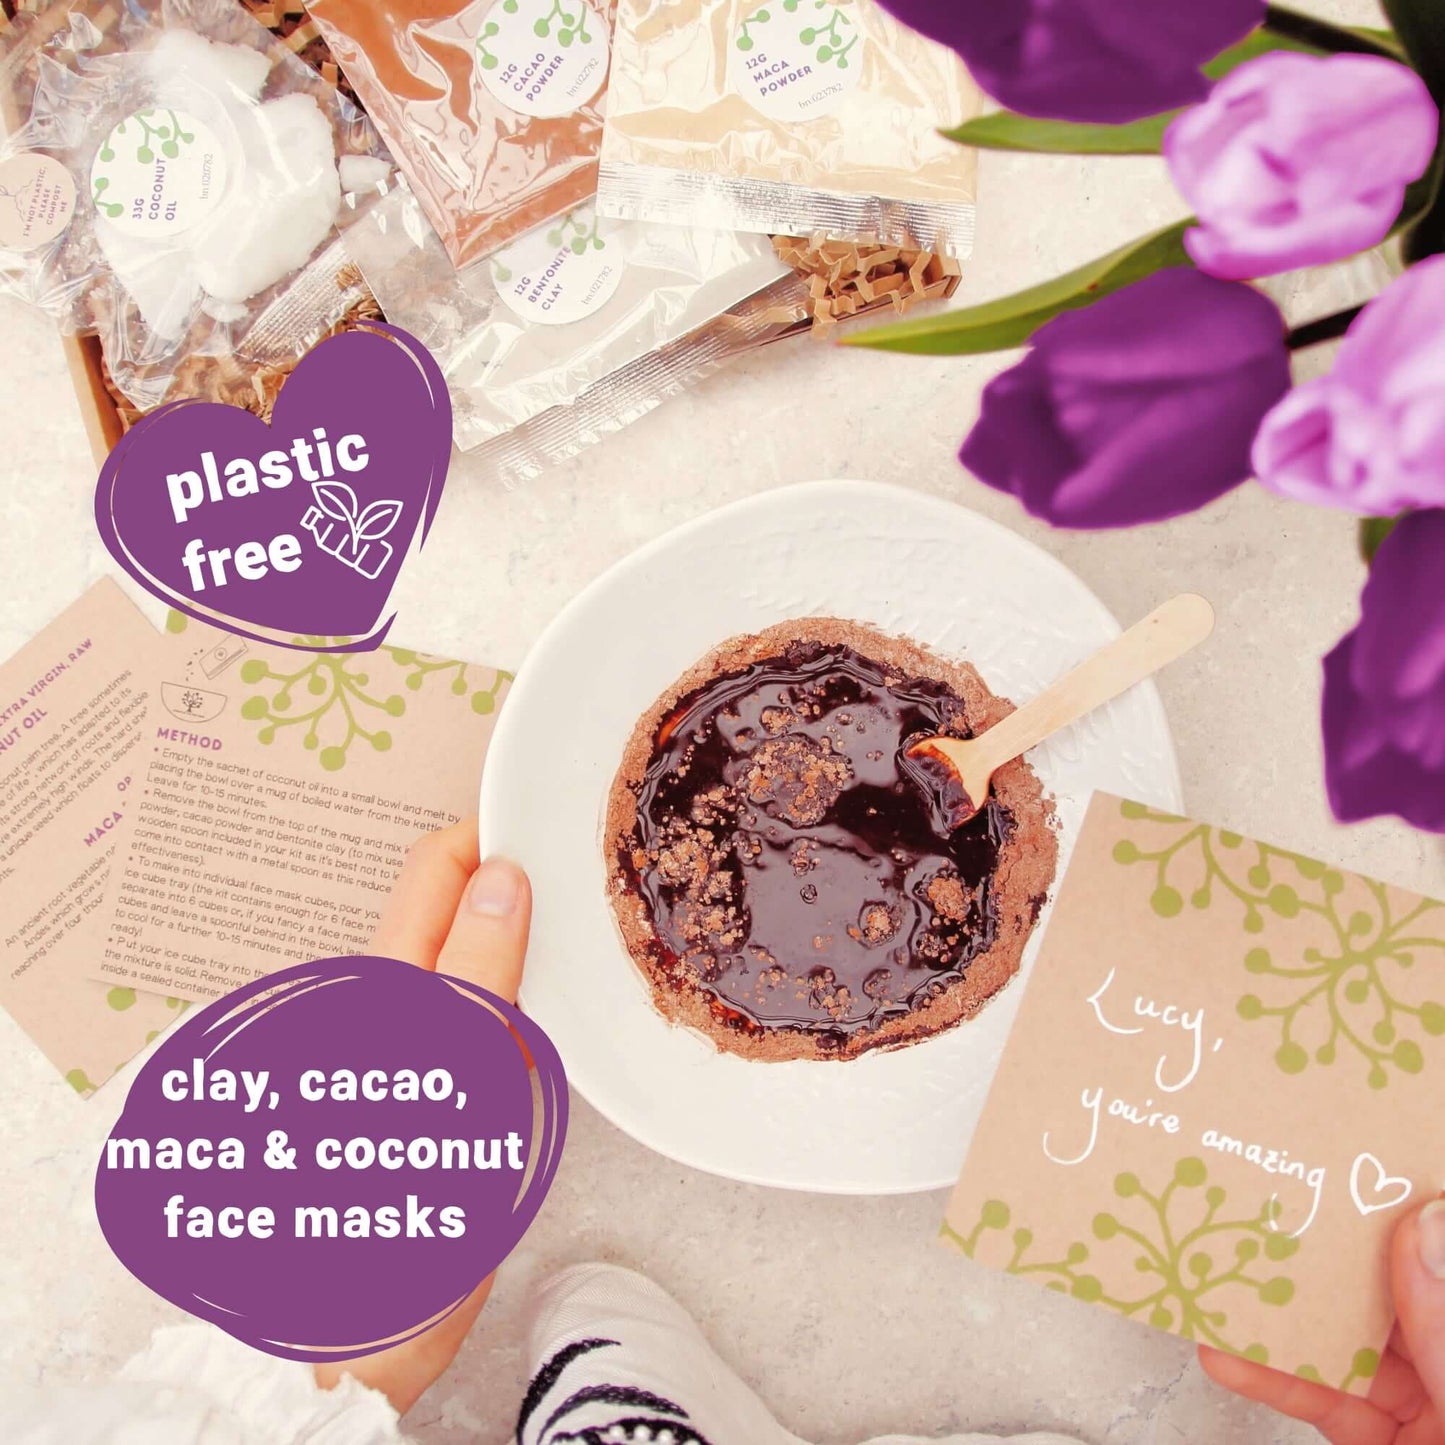 organic vegan face mask kit ingredients packaged in eco-friendly, plastic free packaging